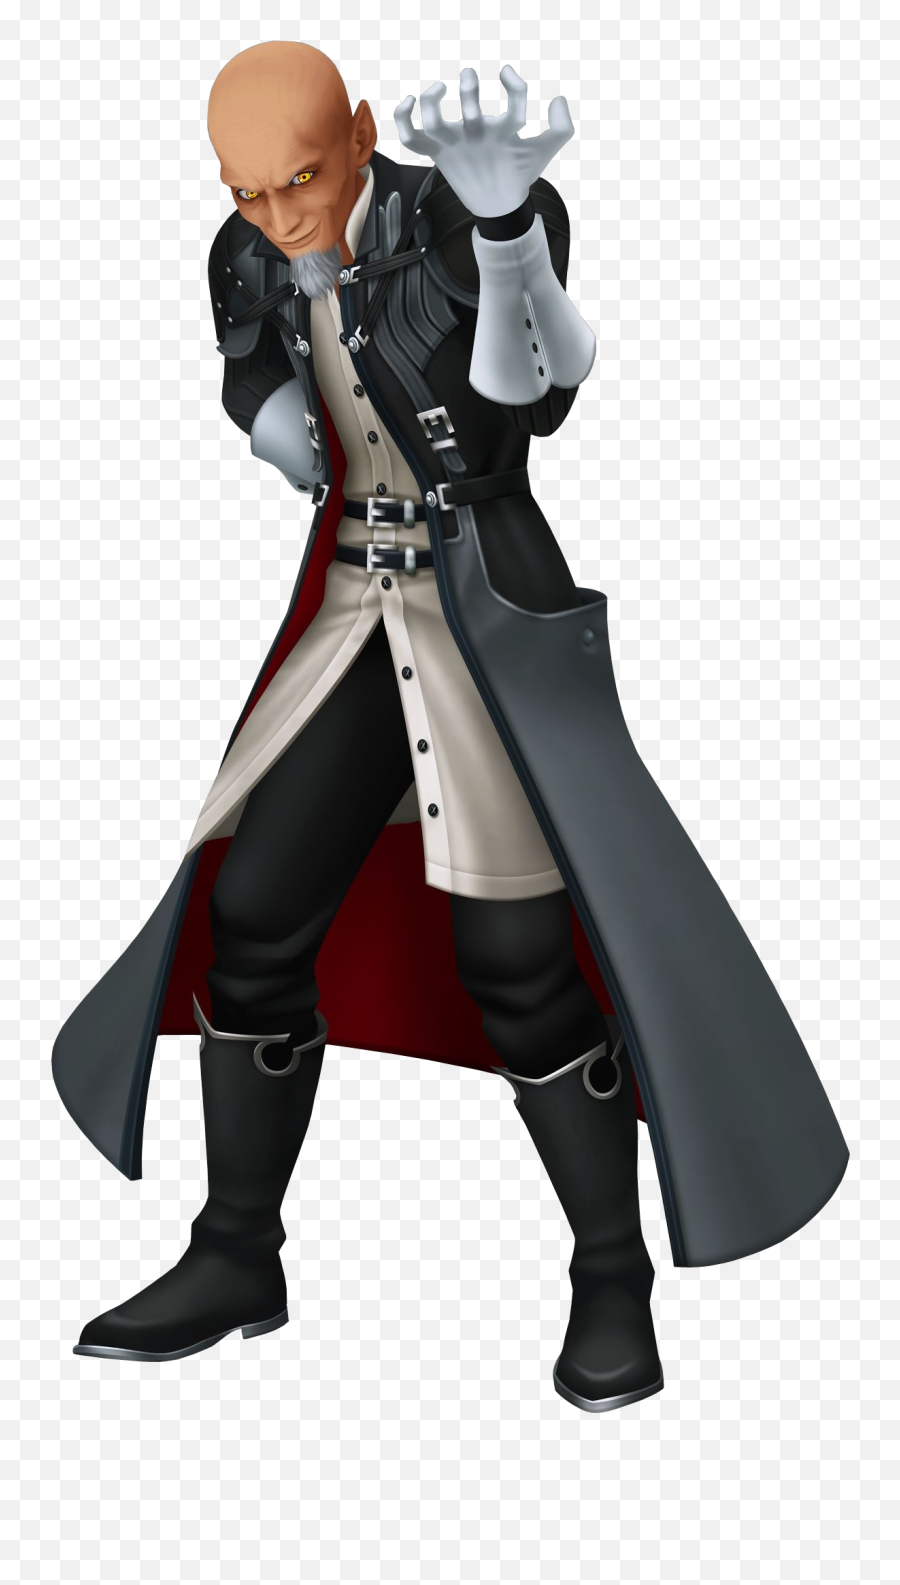 Characters Of Kingdom Hearts Png U0026 Free - Bad Guy In Kingdom Hearts,Kingdom Hearts Transparent